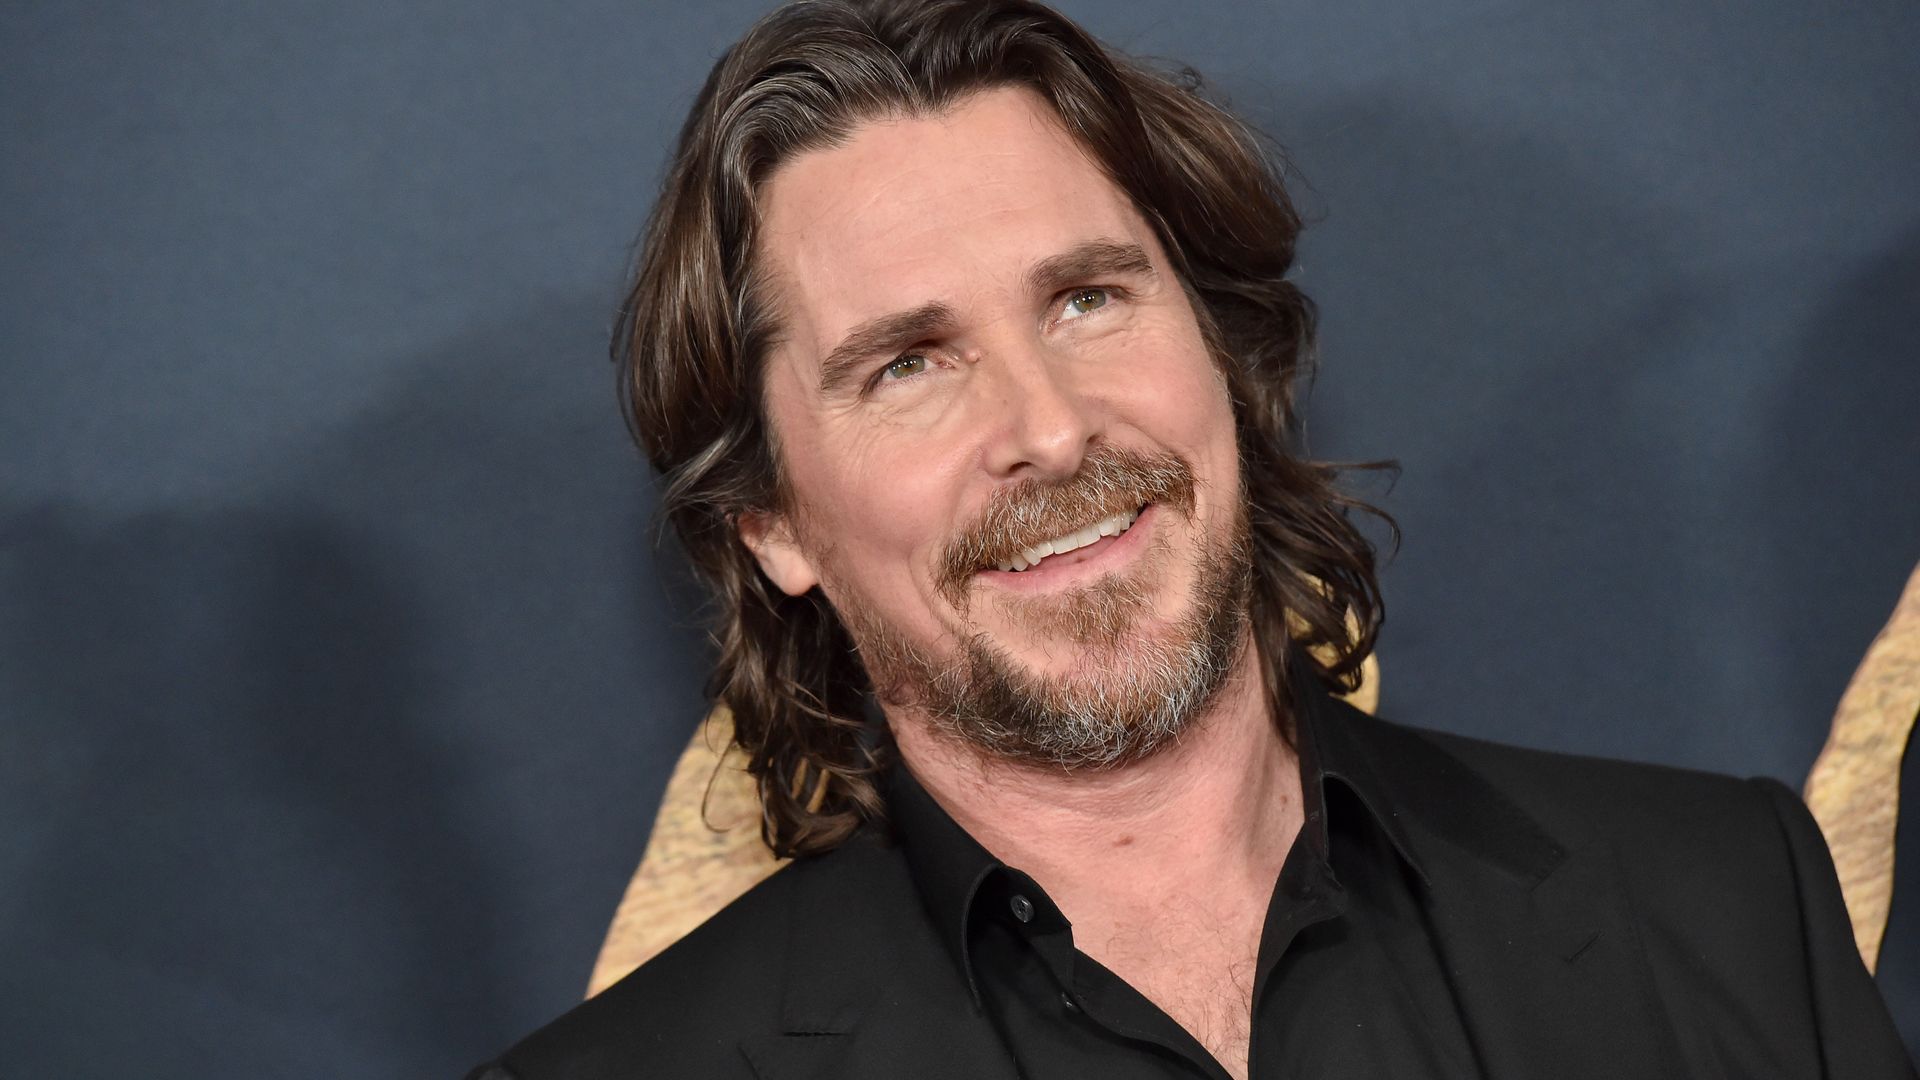 Christian Bale - Biography